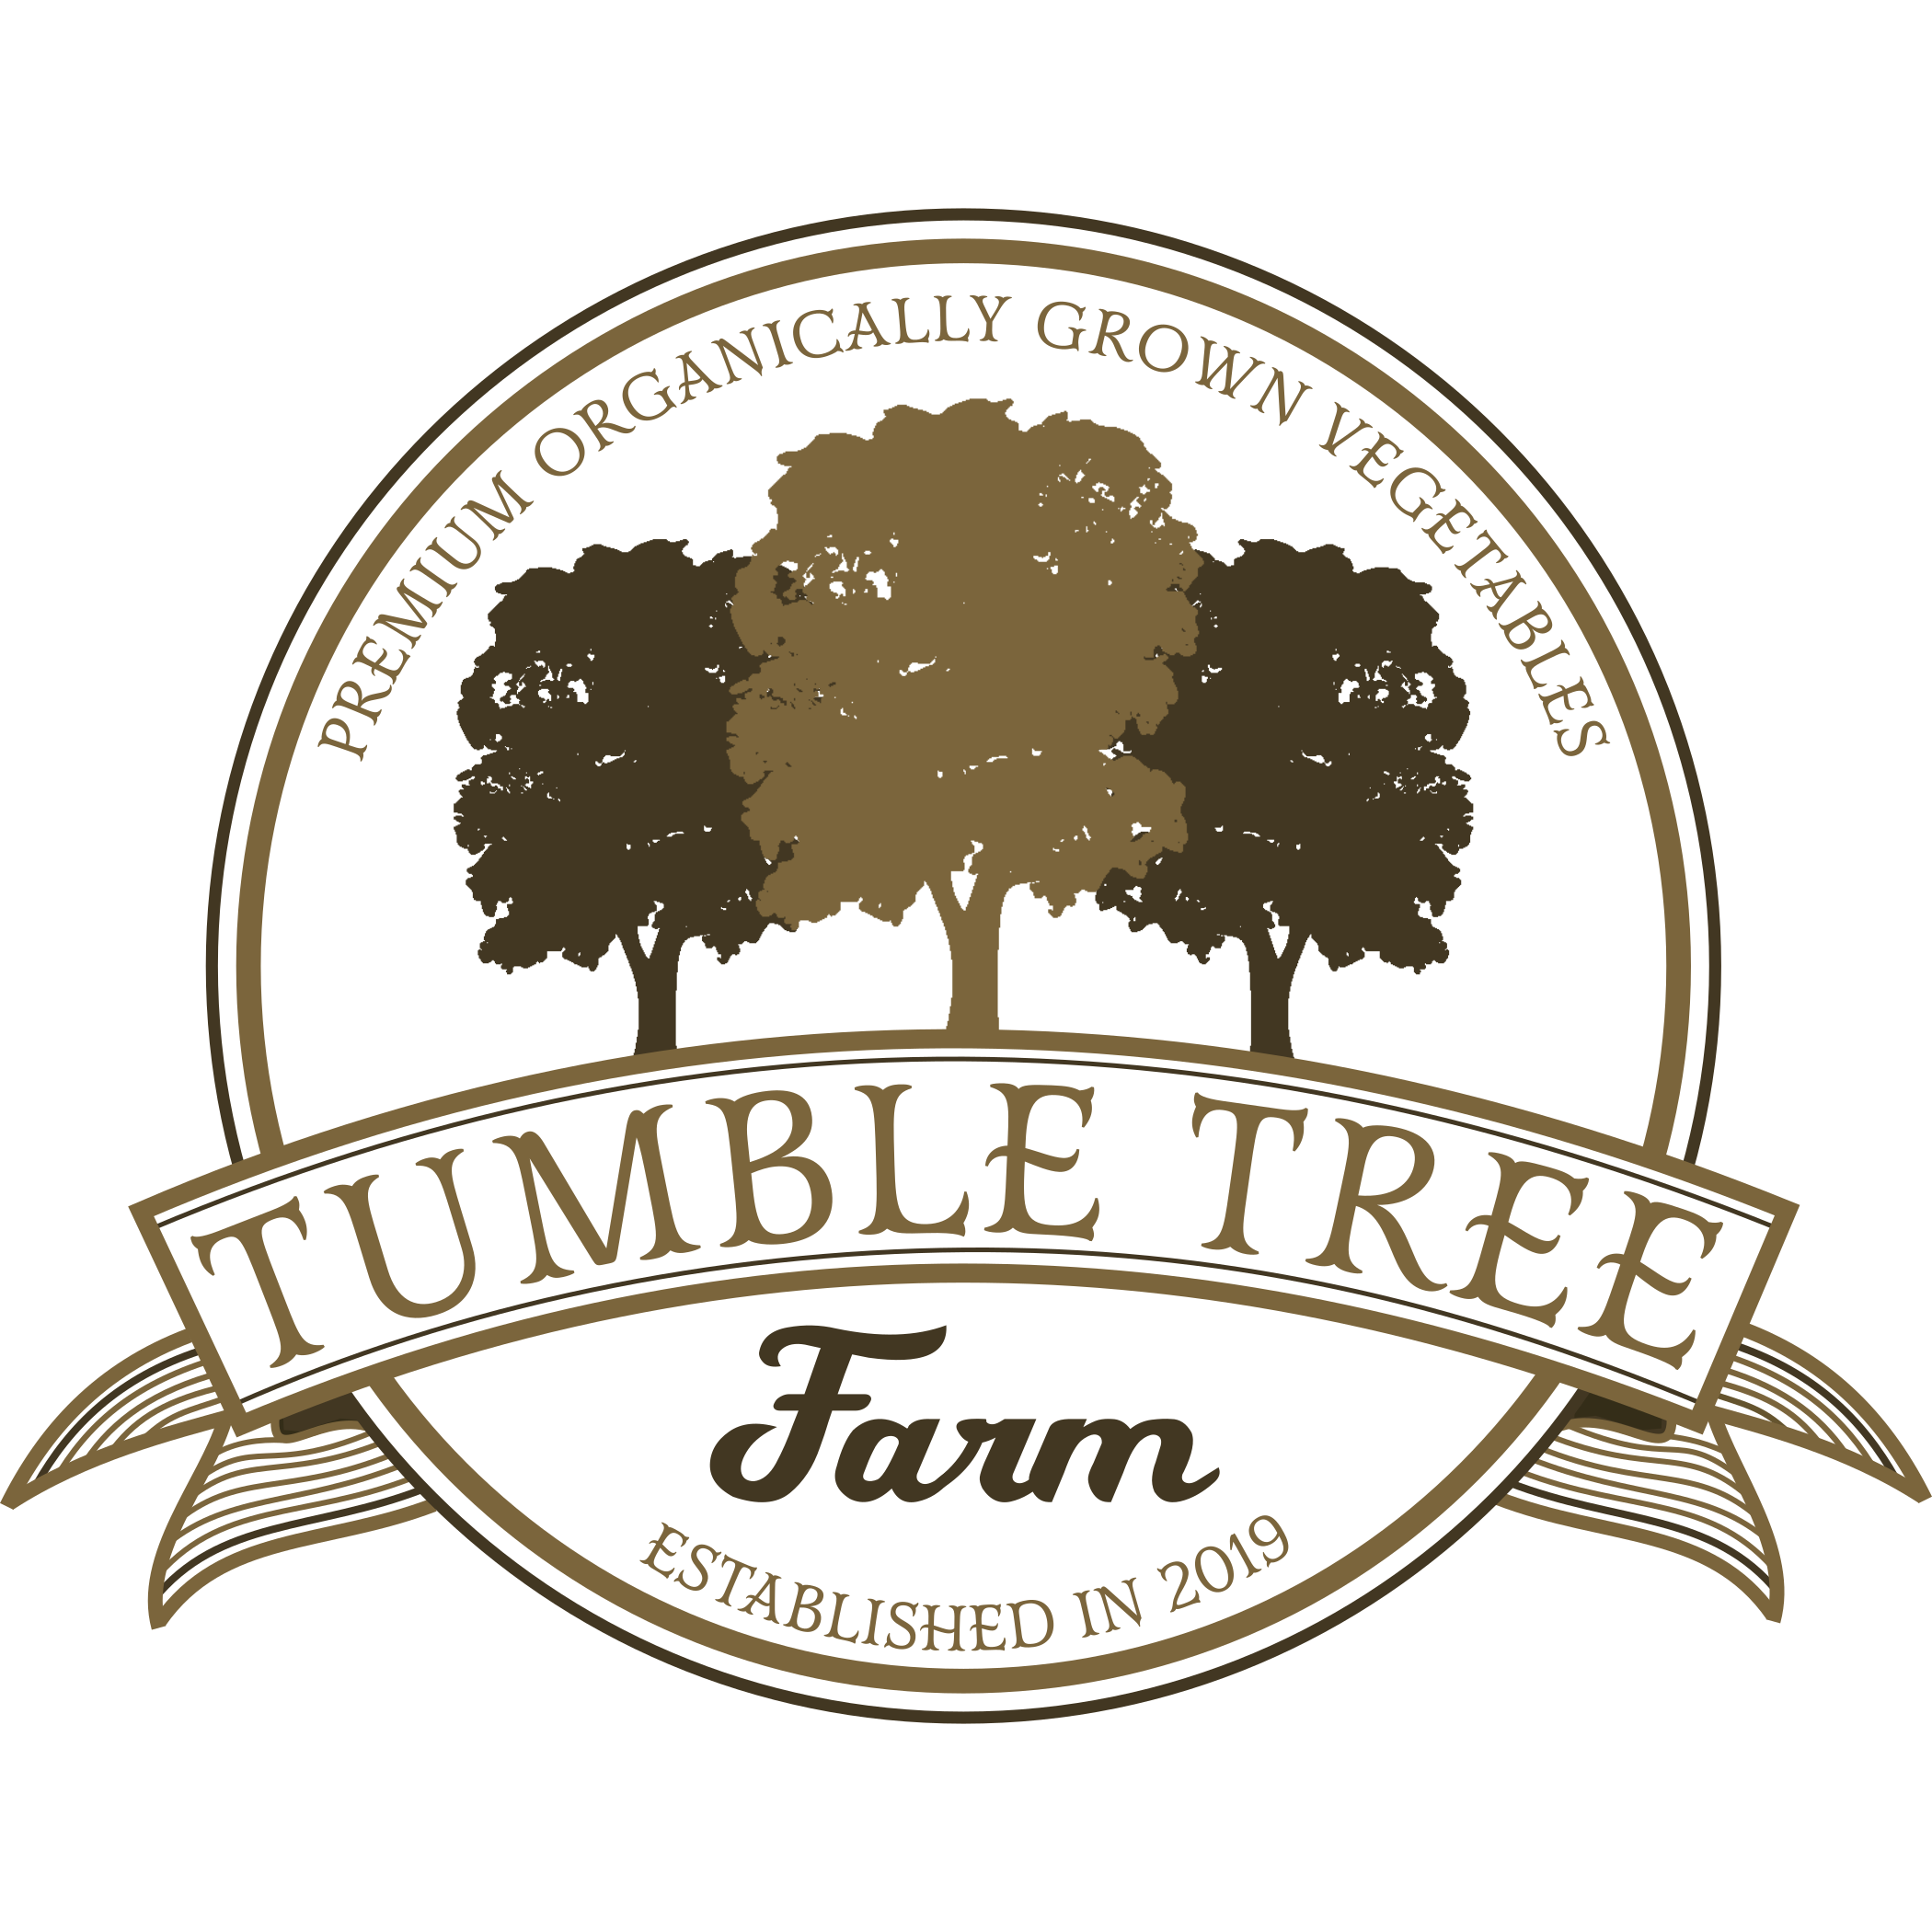 Tumble Tree Farm